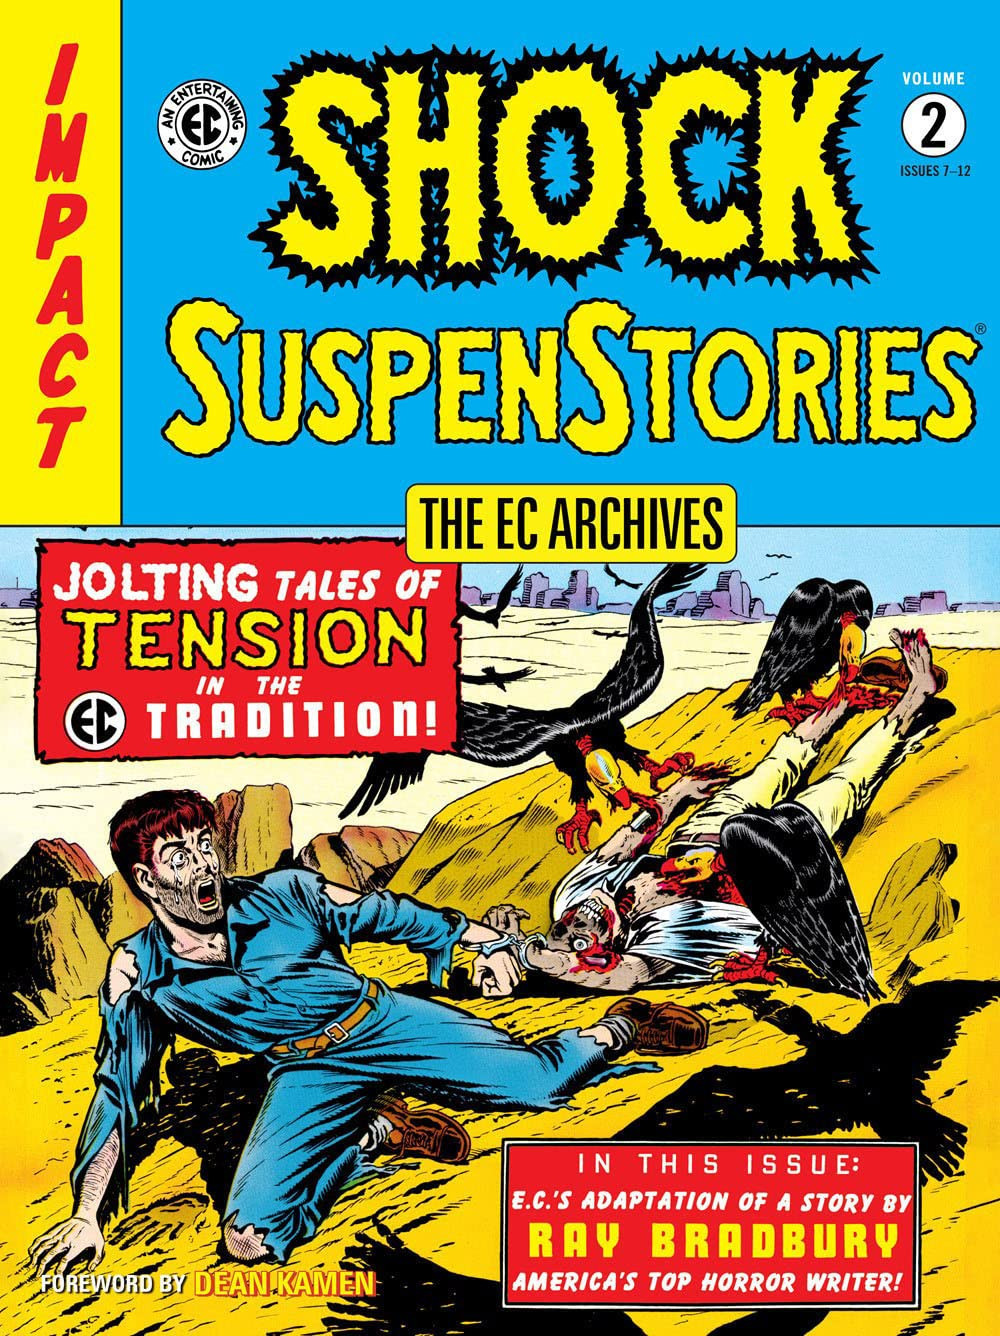 Shock SuspenStories 2